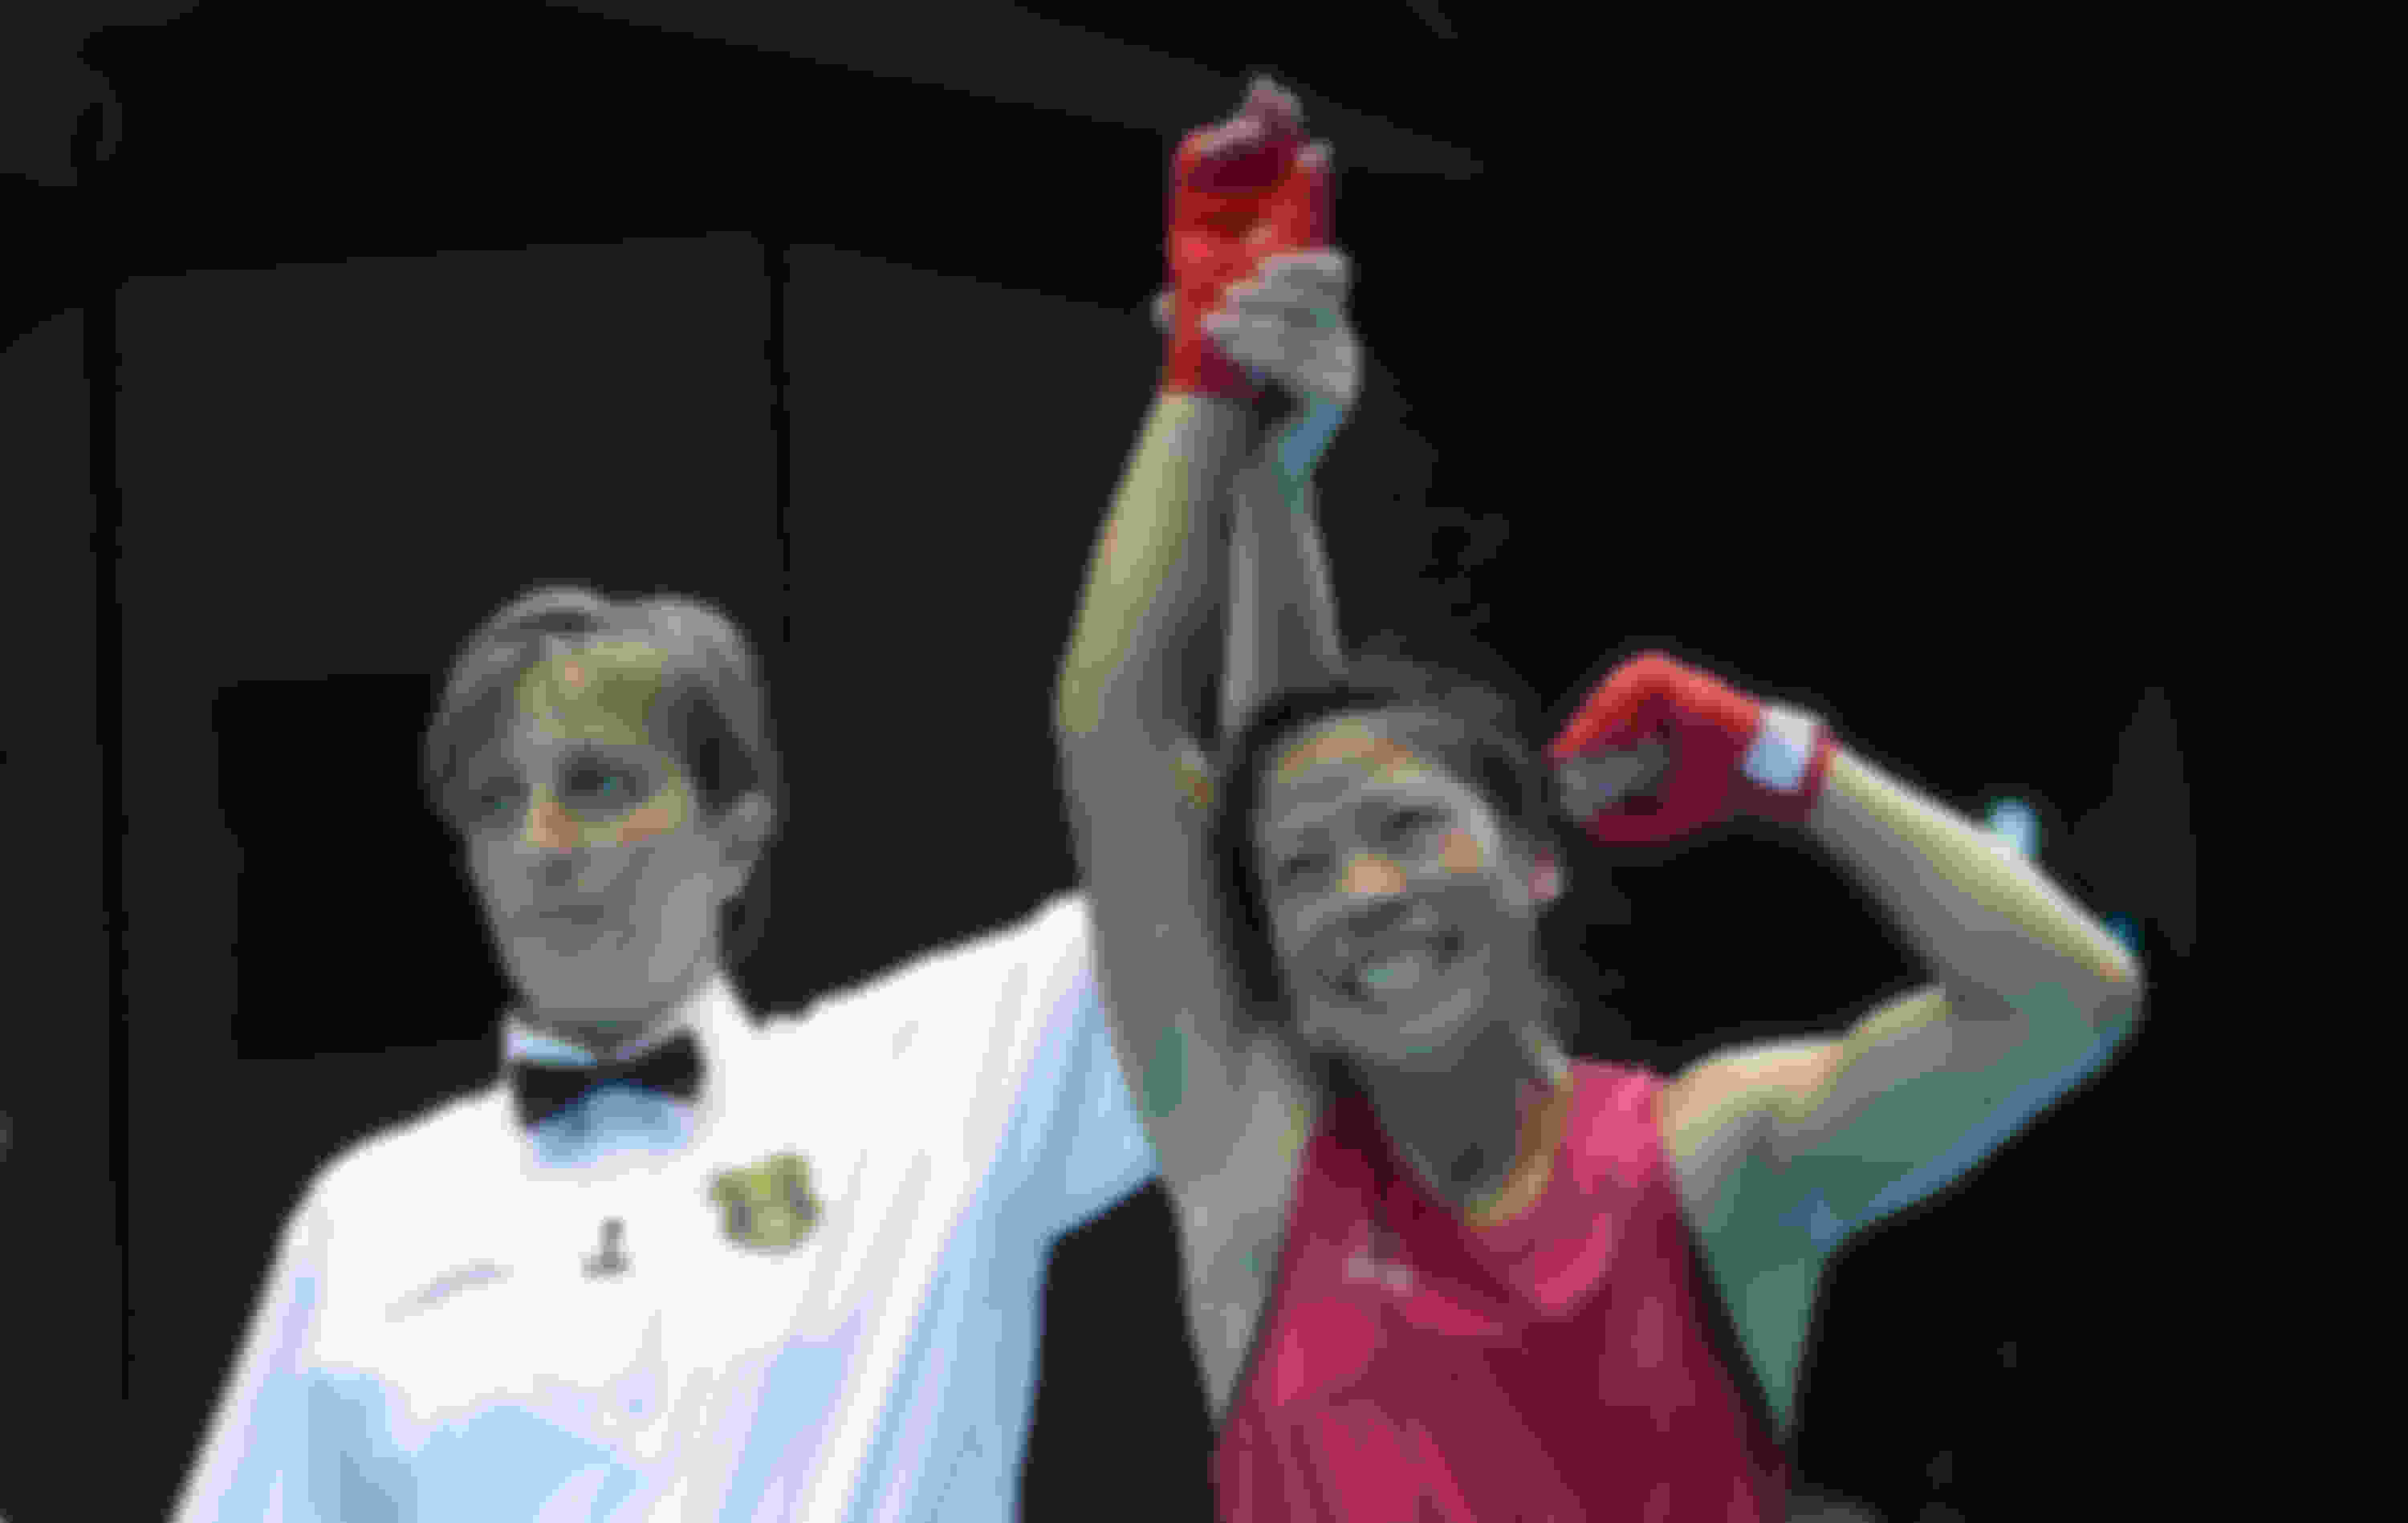 Mary Kom has won a record six world titles.